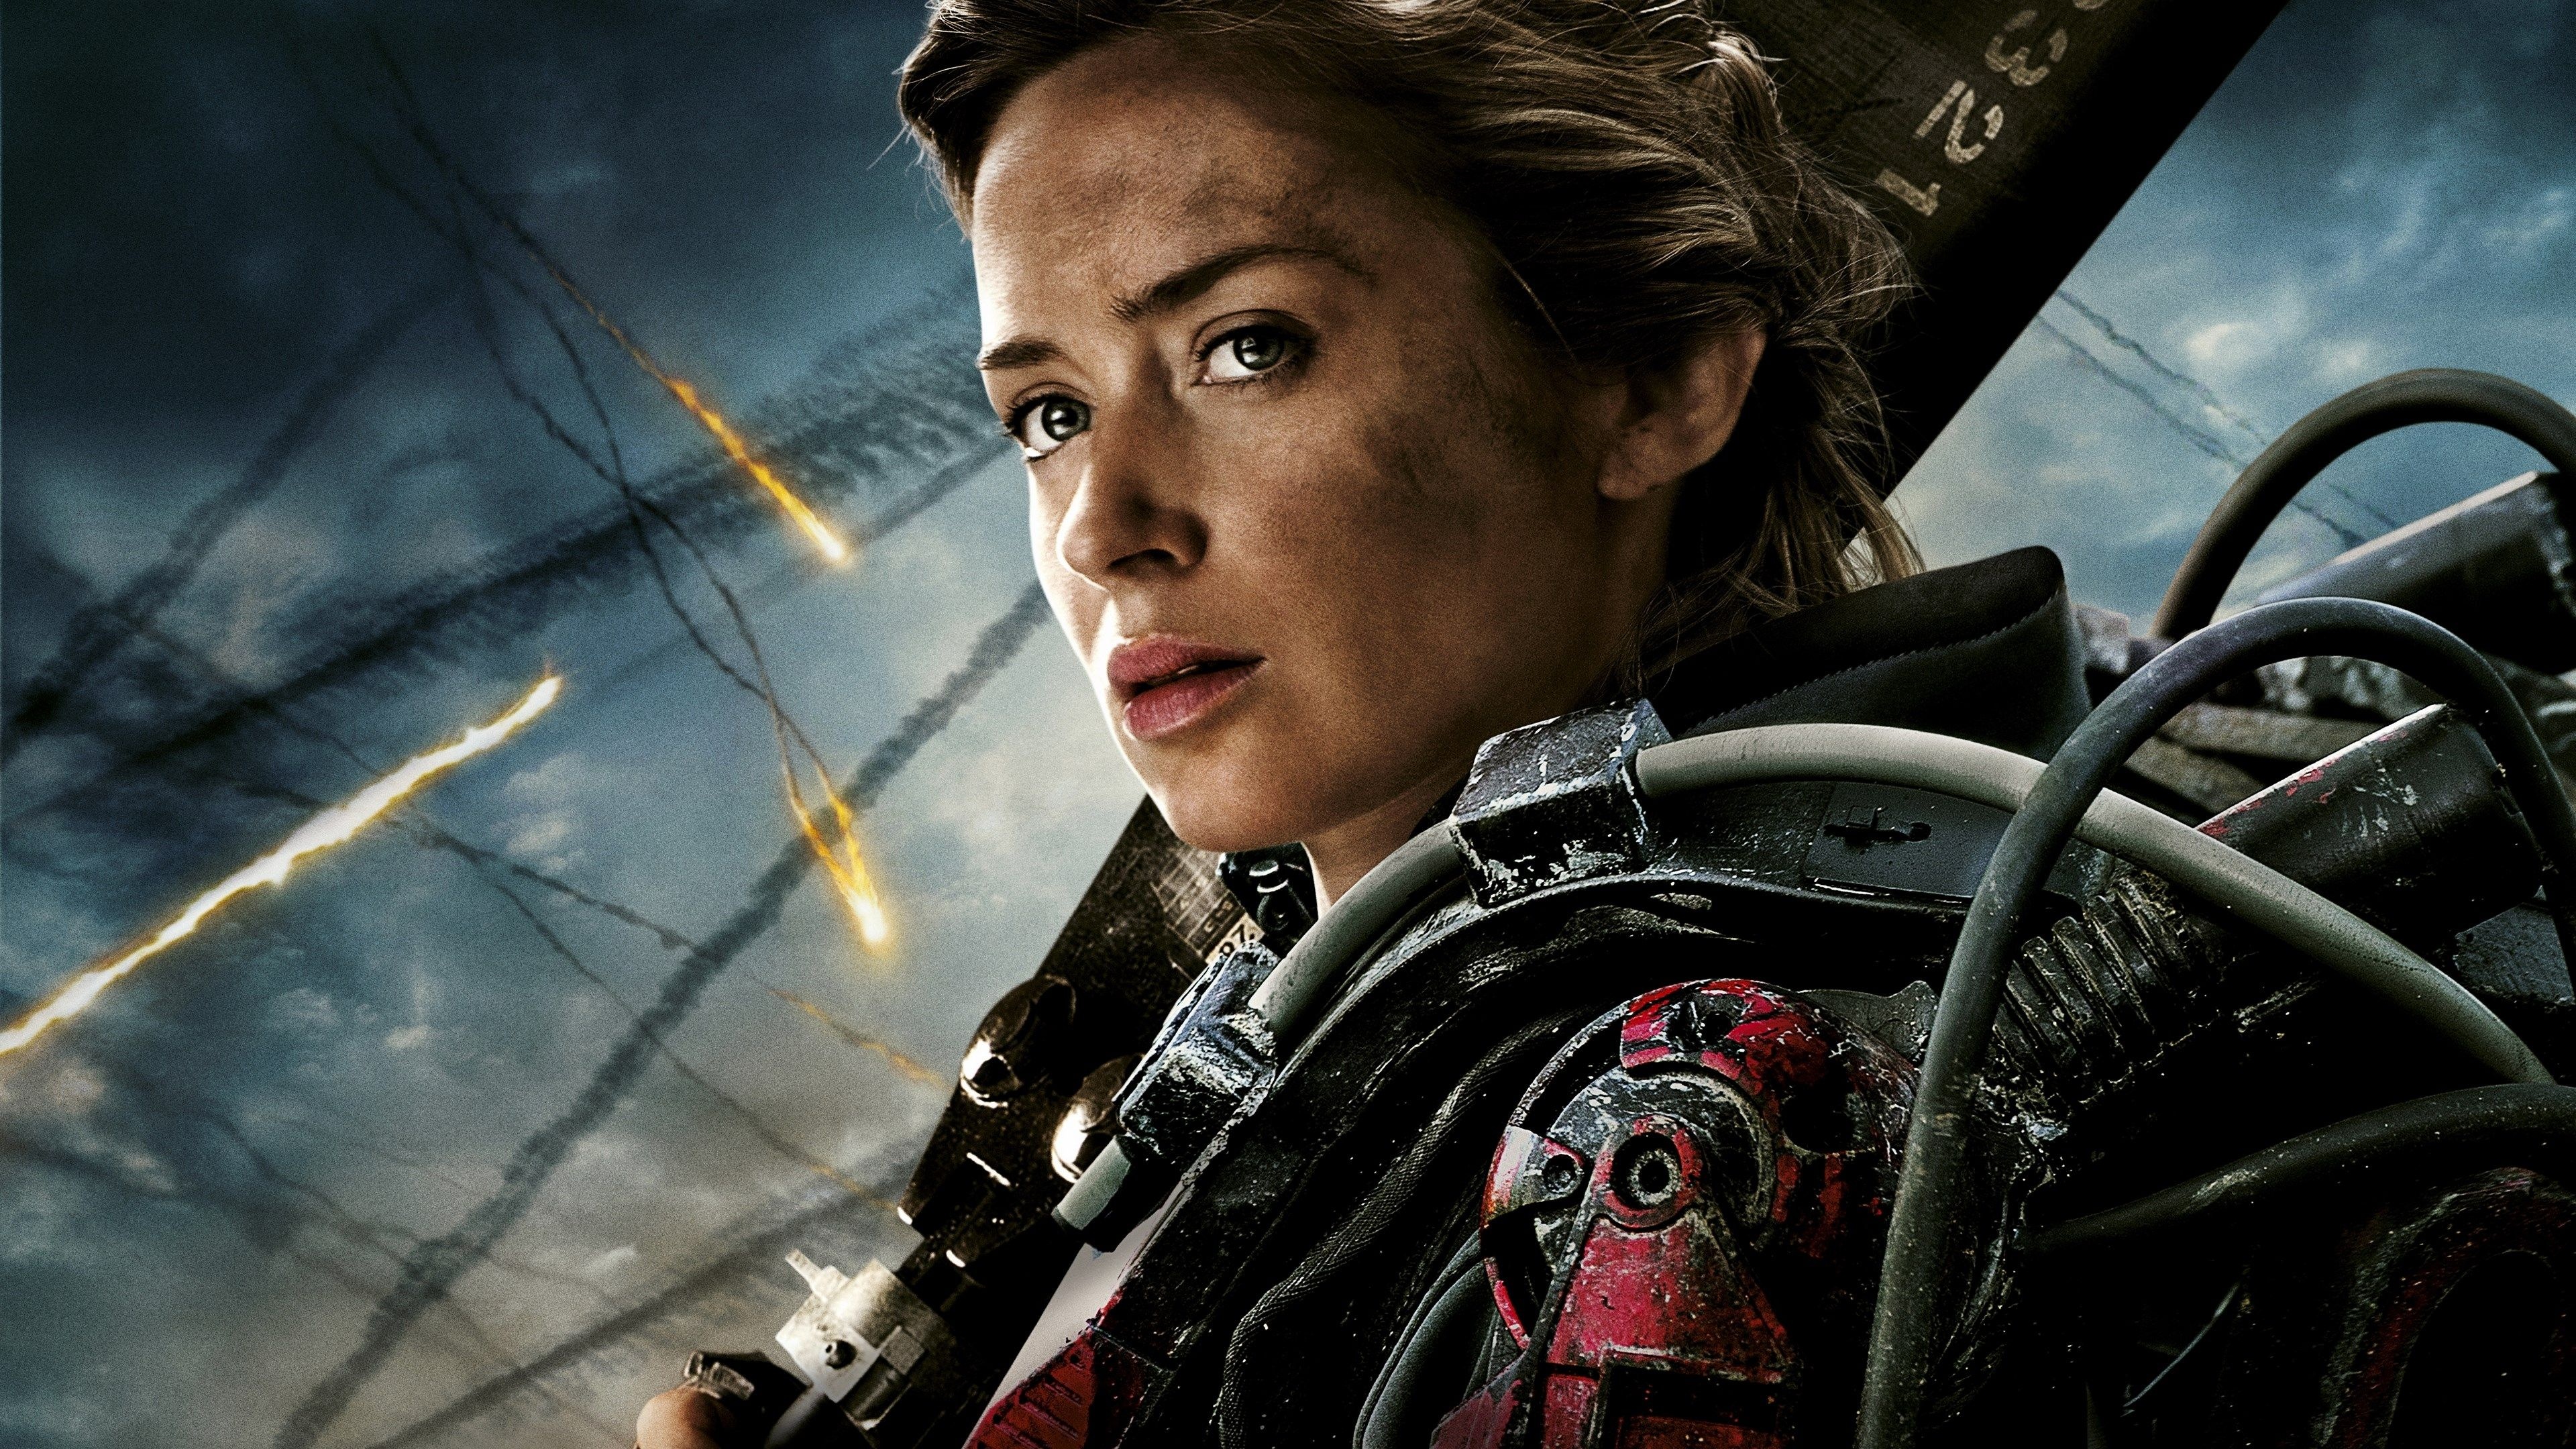 Emily Blunt and John Krasinski: Played Rita Vrataski in a 2014 science fiction action film, Edge of Tomorrow. 3840x2160 4K Background.